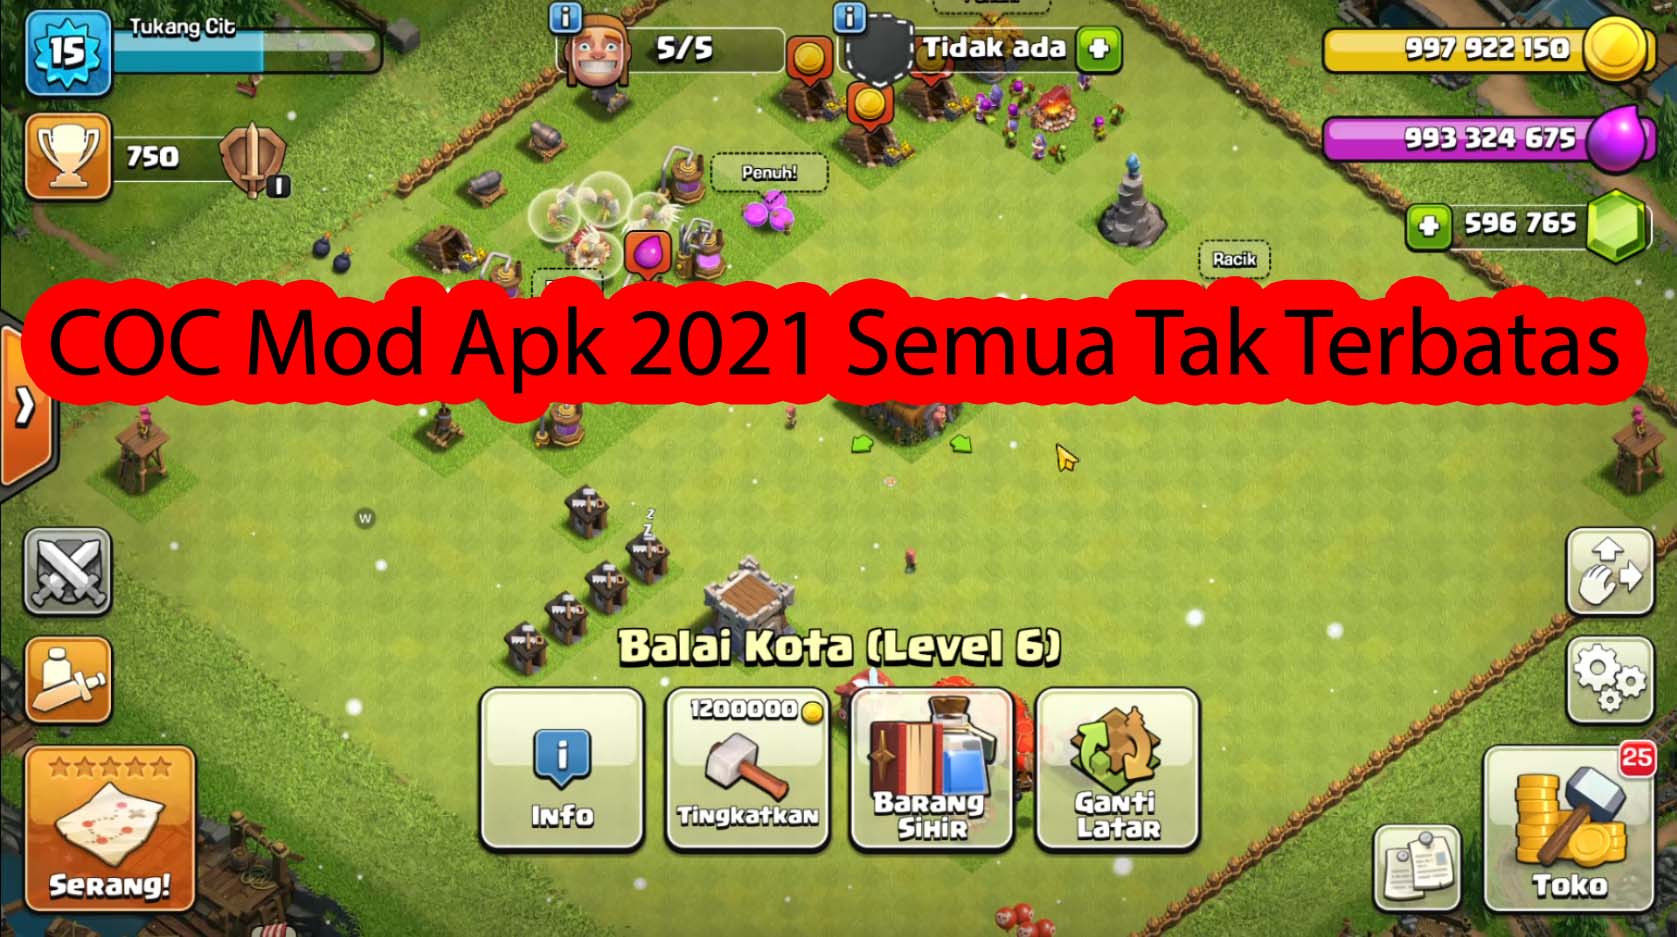 Clash of clans mod apk 2021